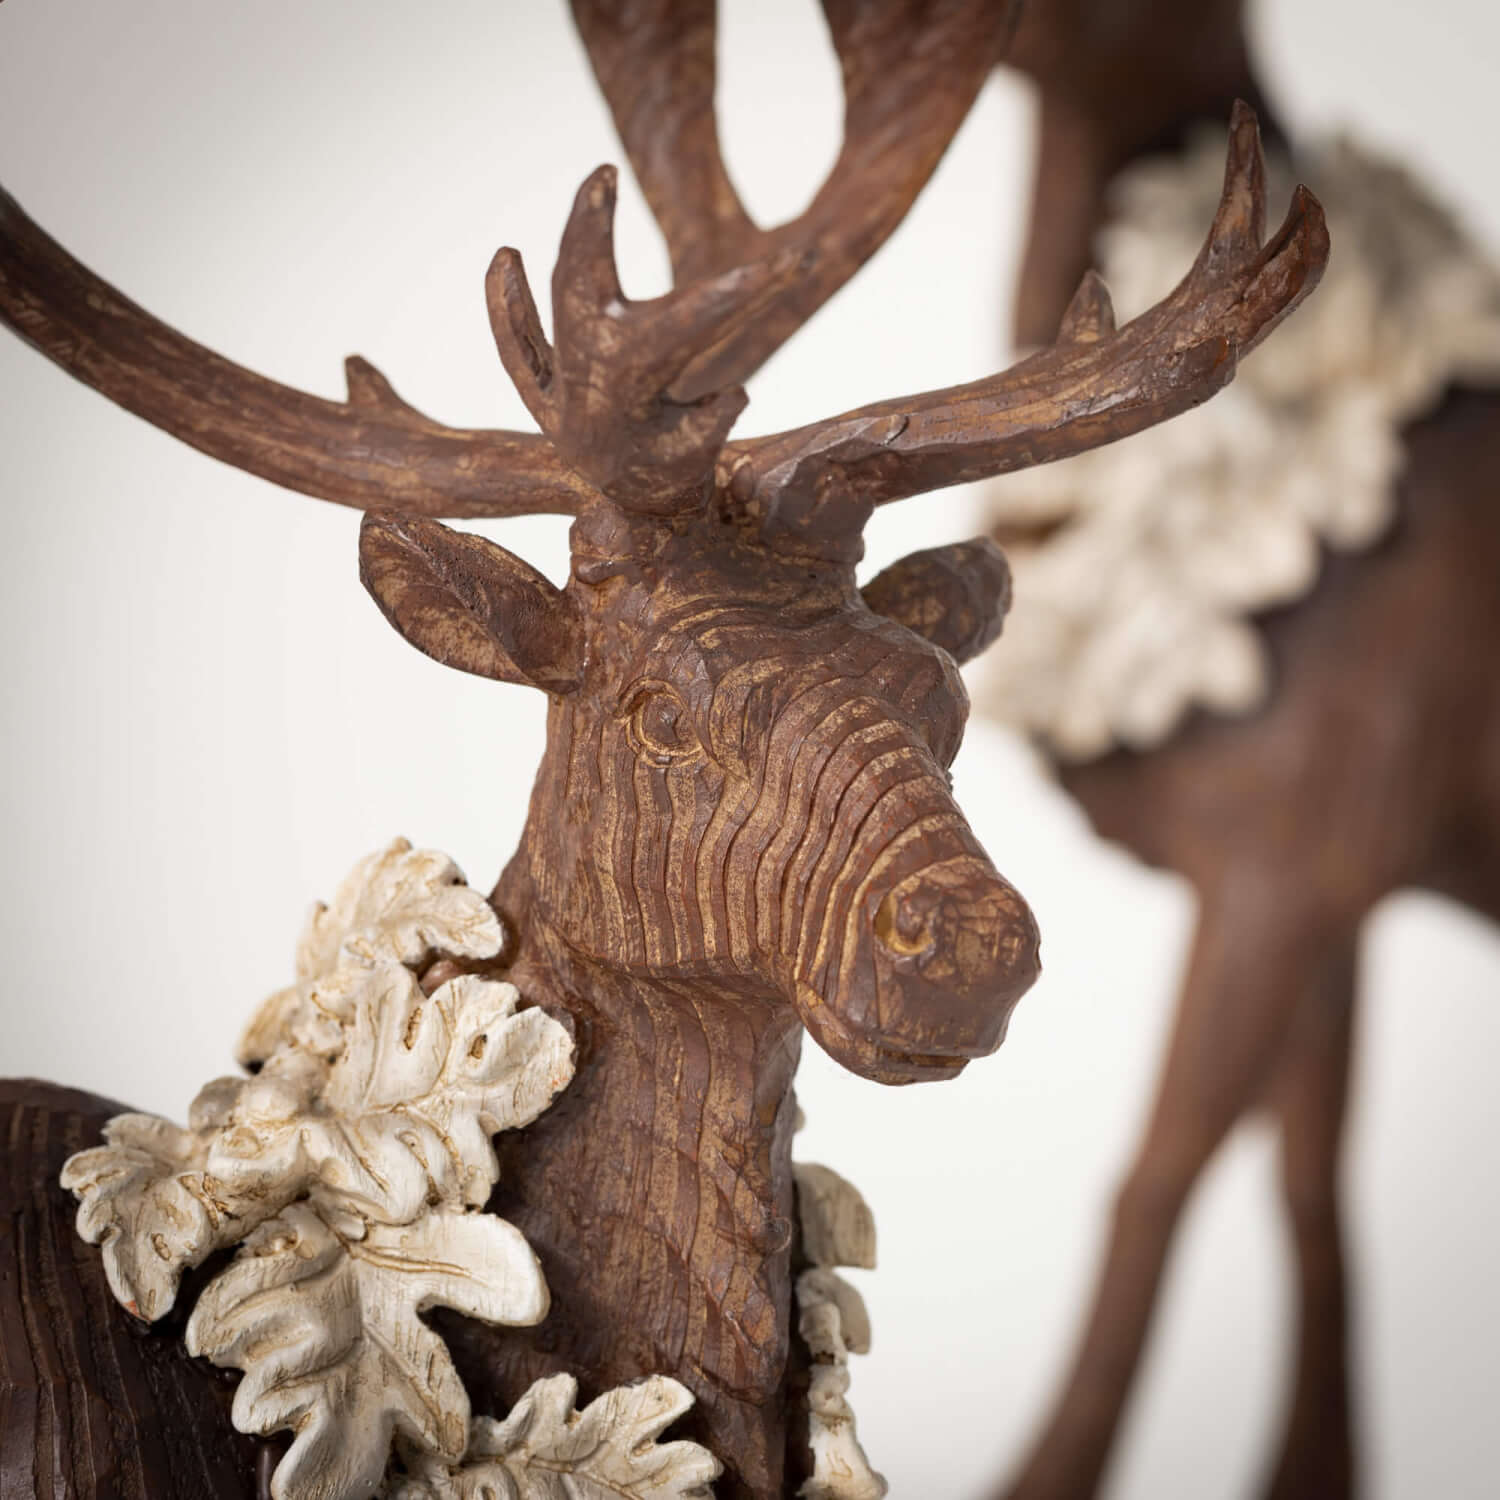 Deer Figurines With Wreaths Elevate Home Decor - Figurines